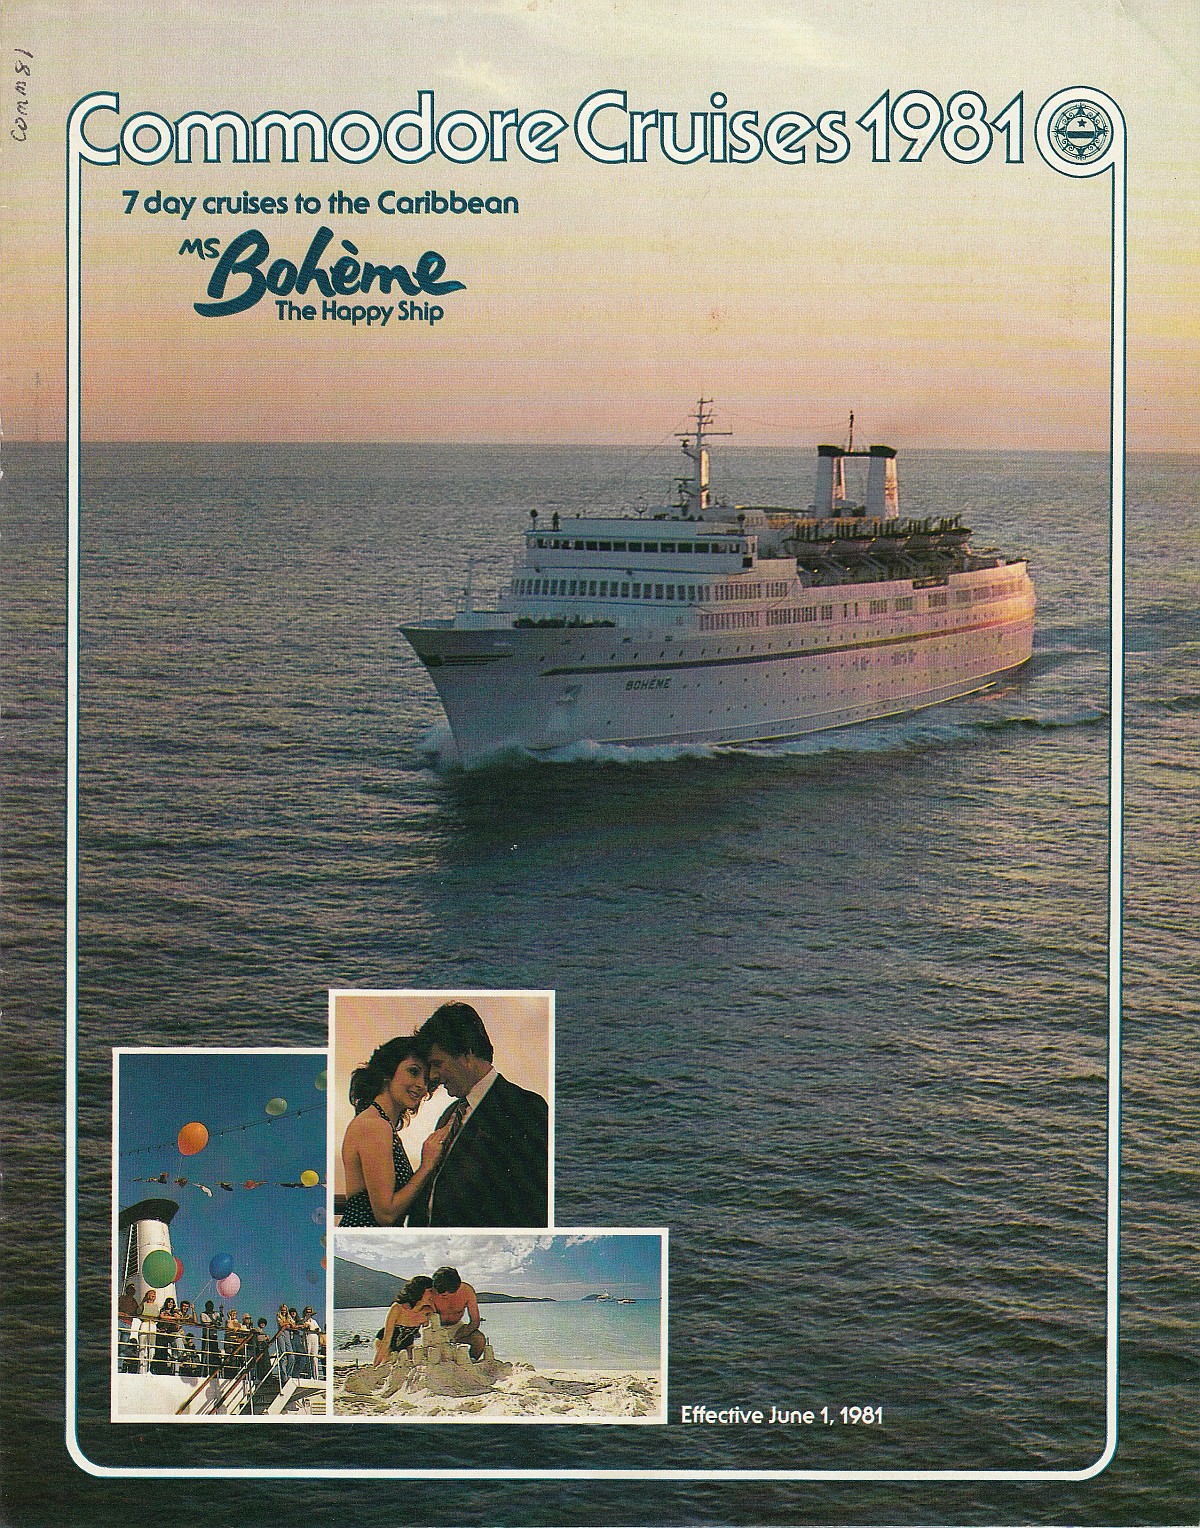 ms Boheme effective June 1, 1981: Commodore Cruises 1981